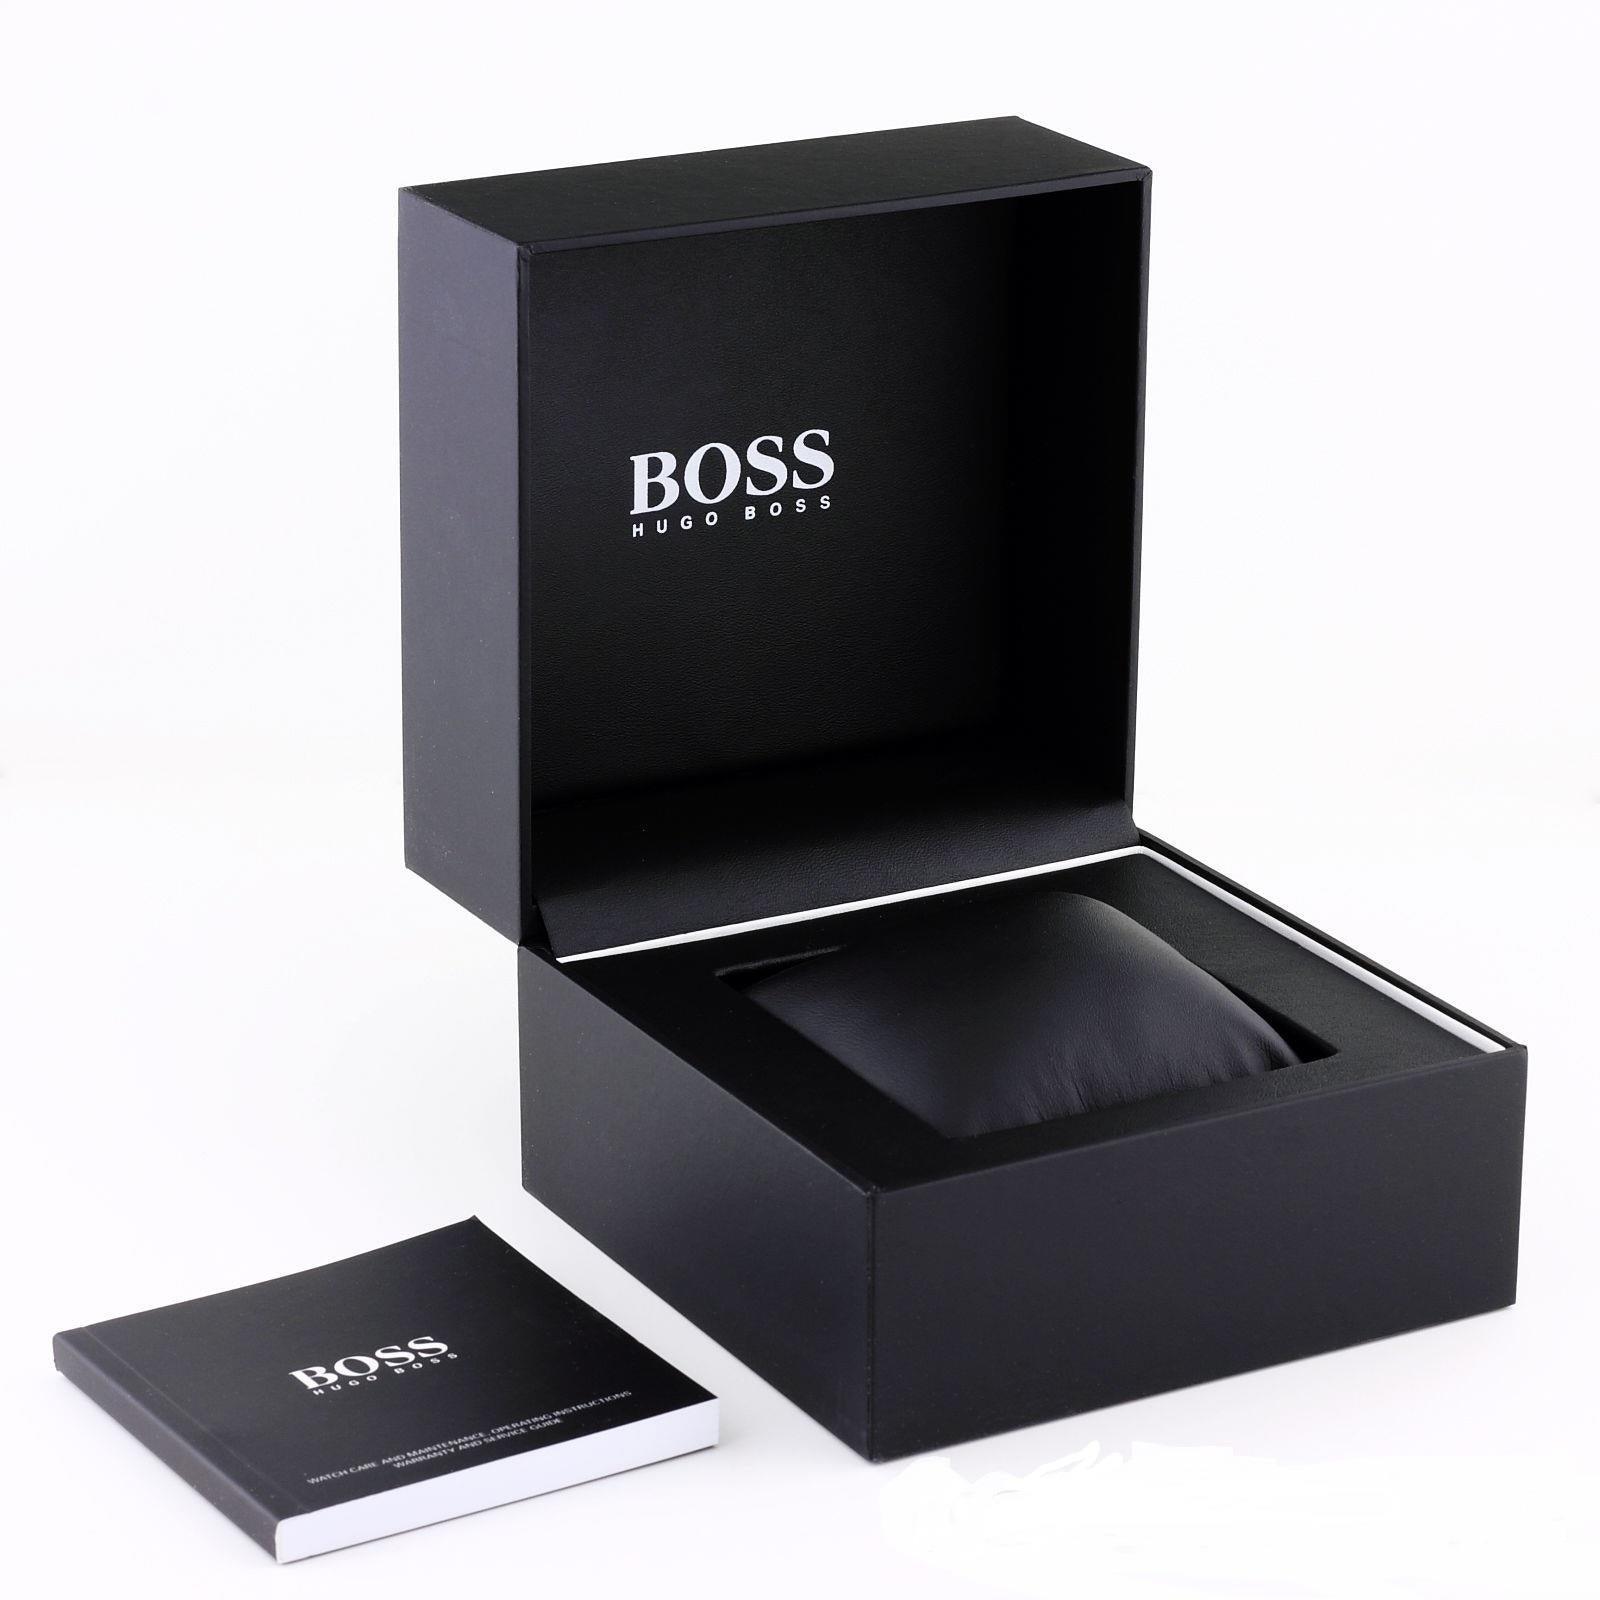 Hugo Boss 1513663 Intensity Men's watch - Watch Home™